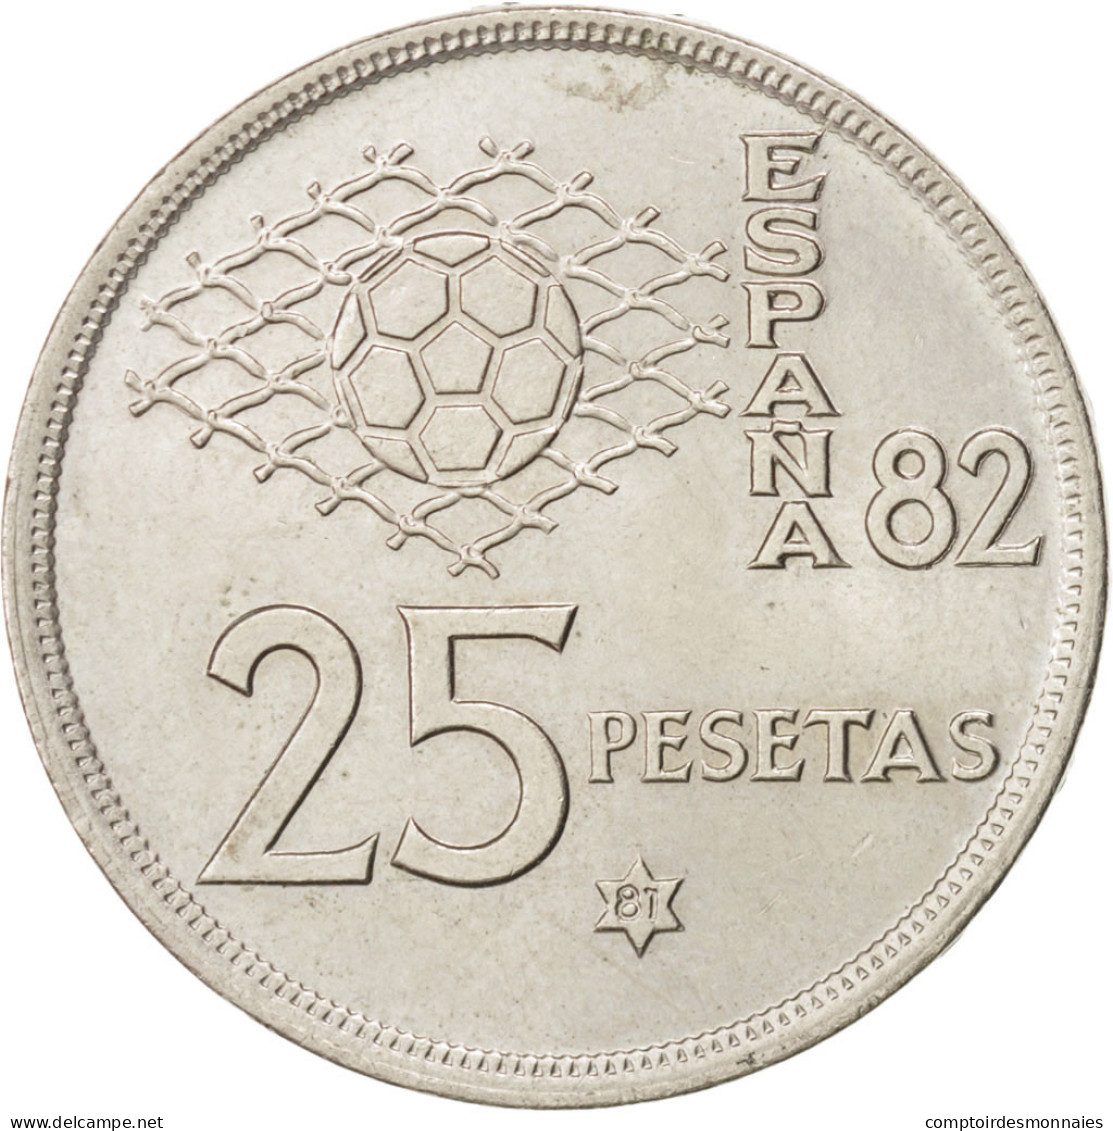 Monnaie, Espagne, Juan Carlos I, 25 Pesetas, 1981, SPL+, Copper-nickel, KM:818 - 25 Pesetas